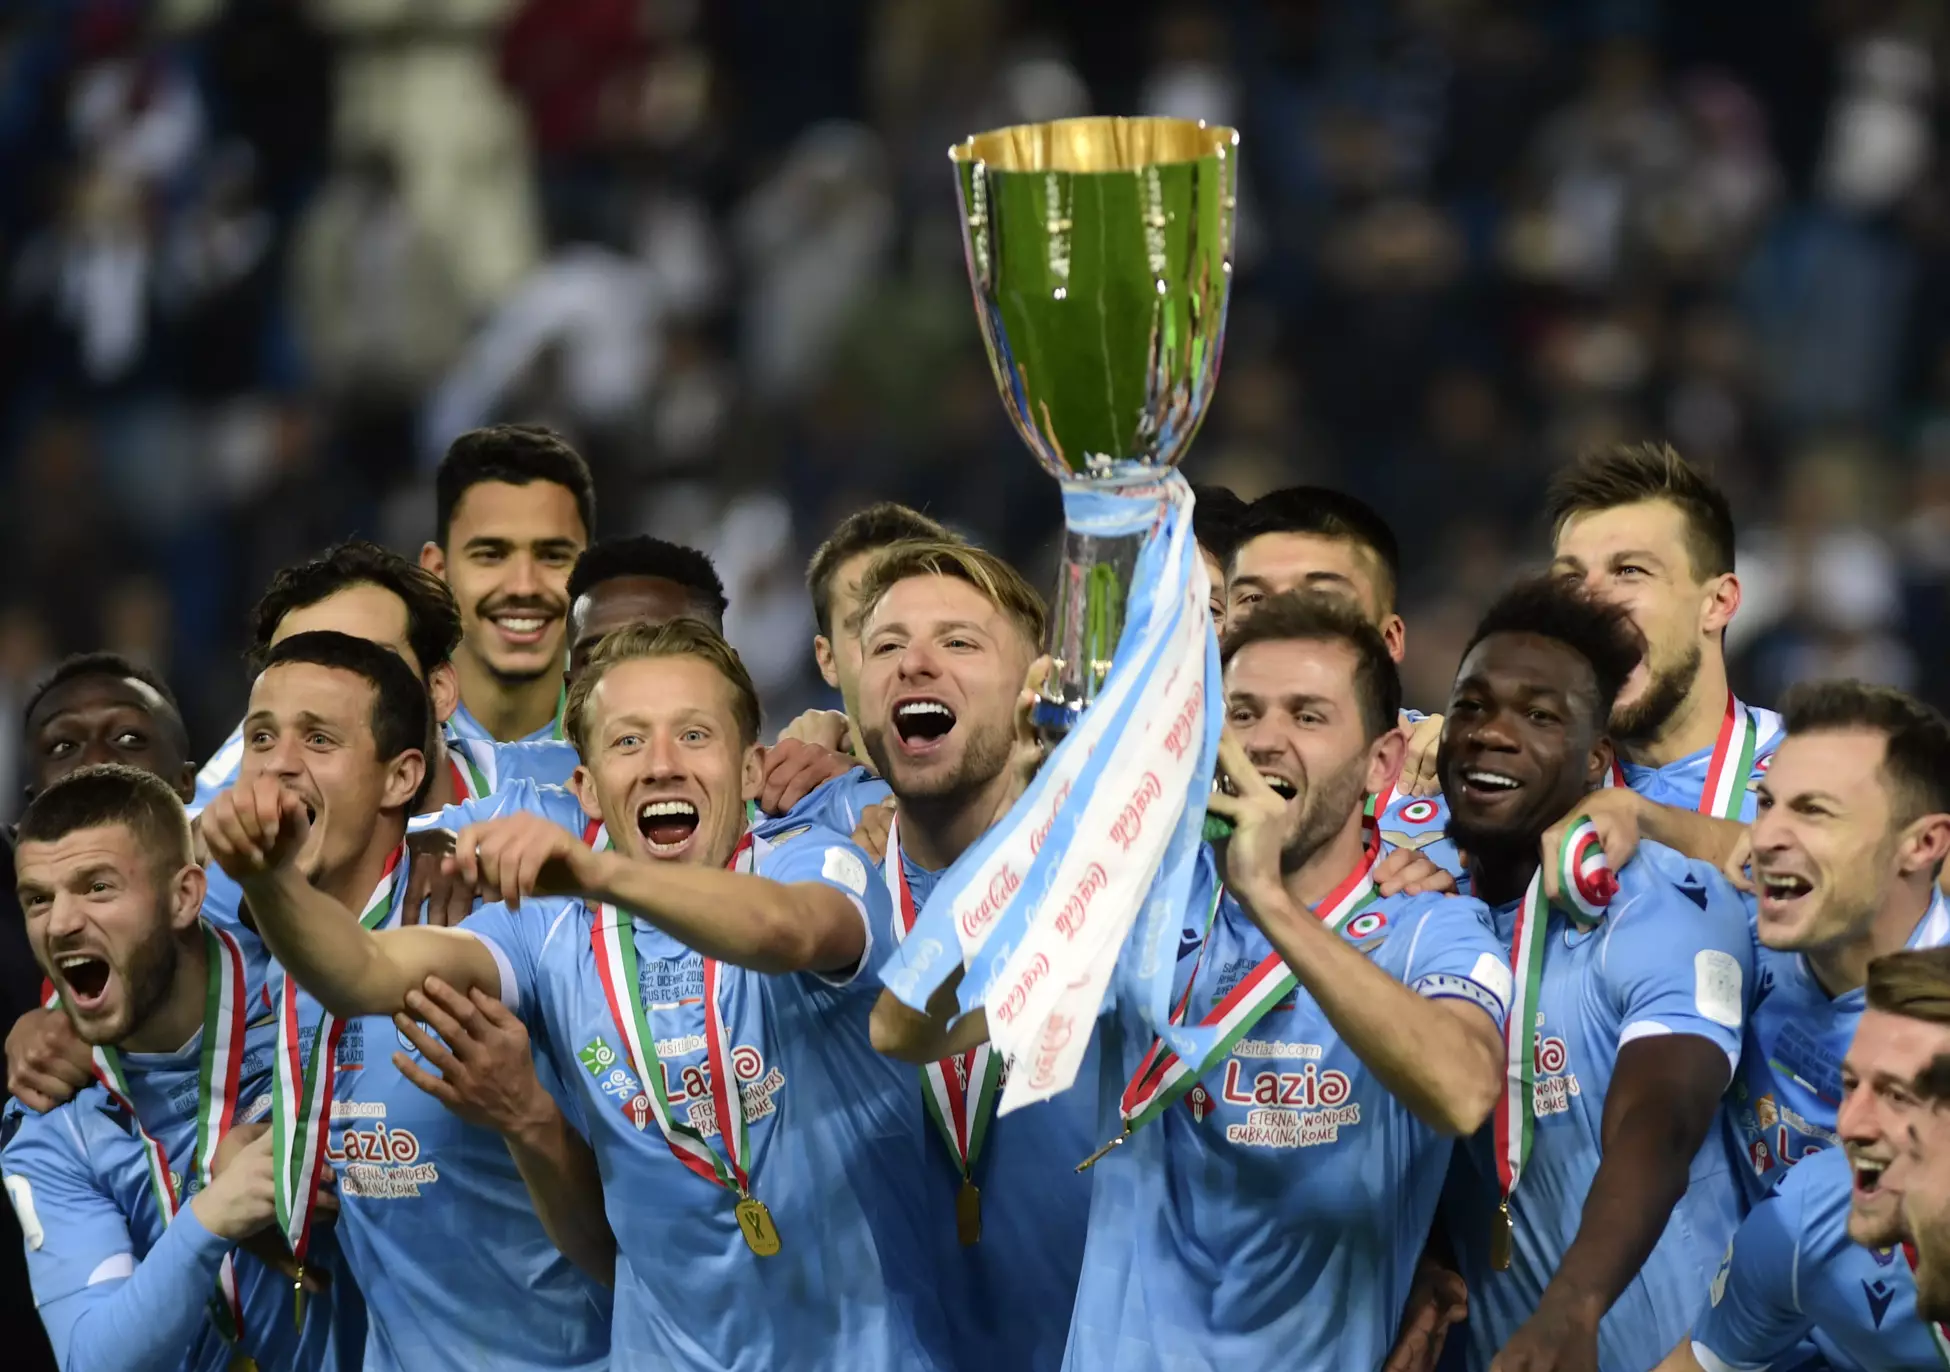 Lazio ran out 3-1 winners in the Italian Super Cup in Saudi Arabia